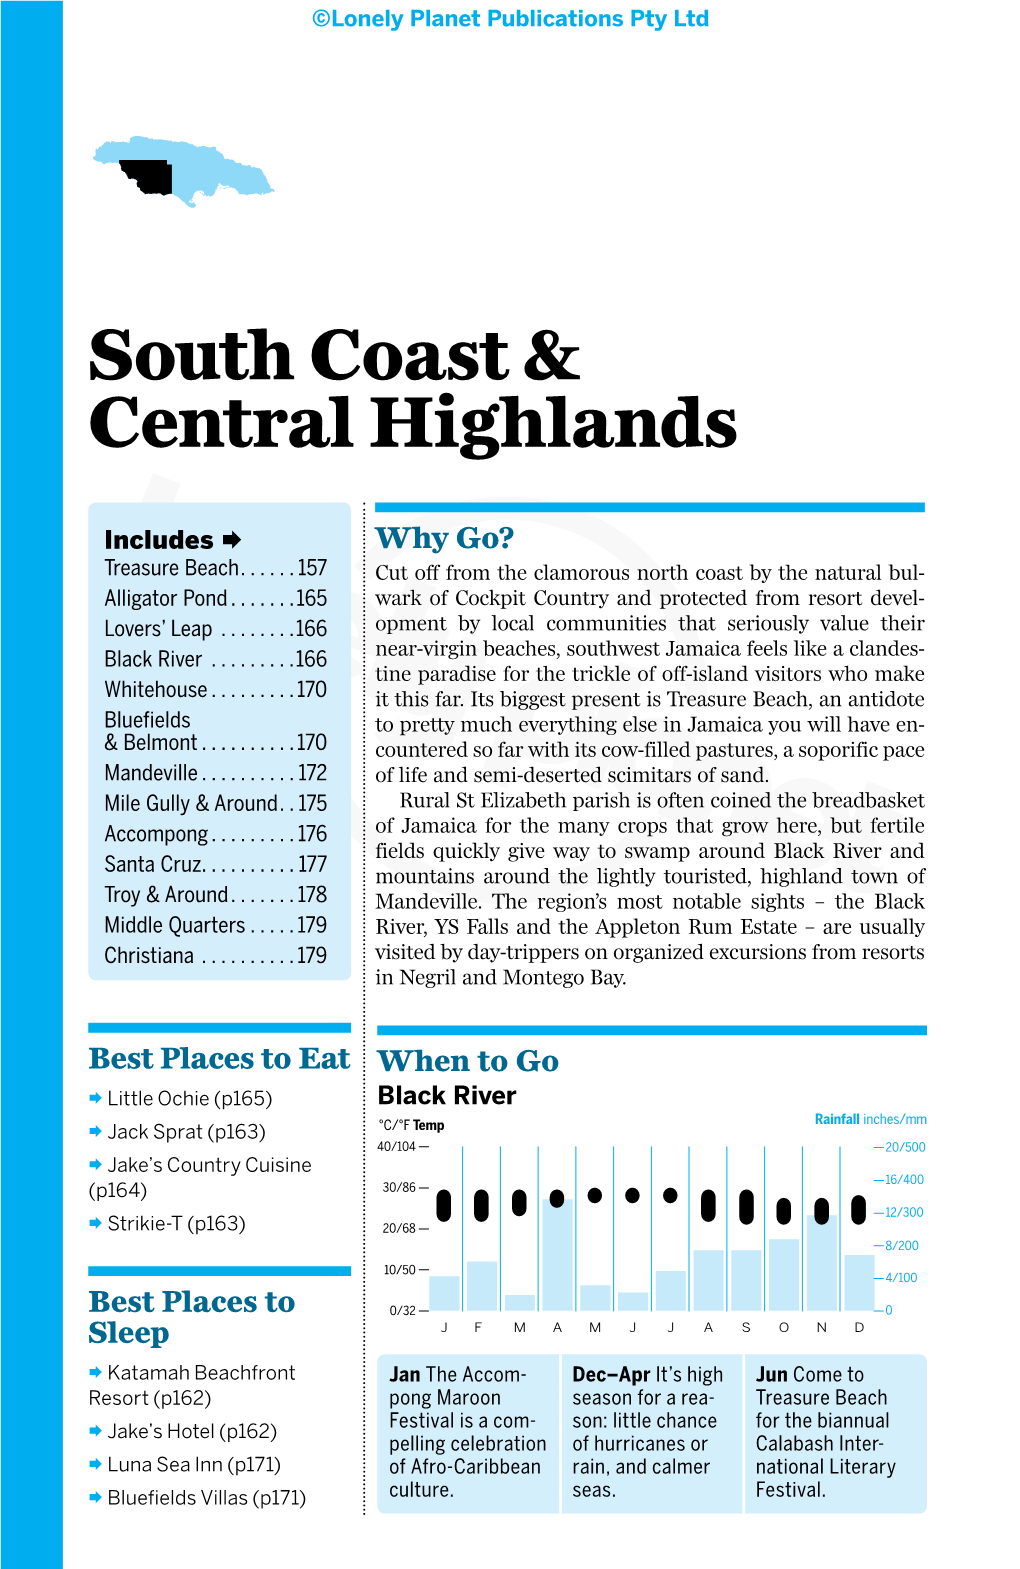 South Coast & Central Highlands